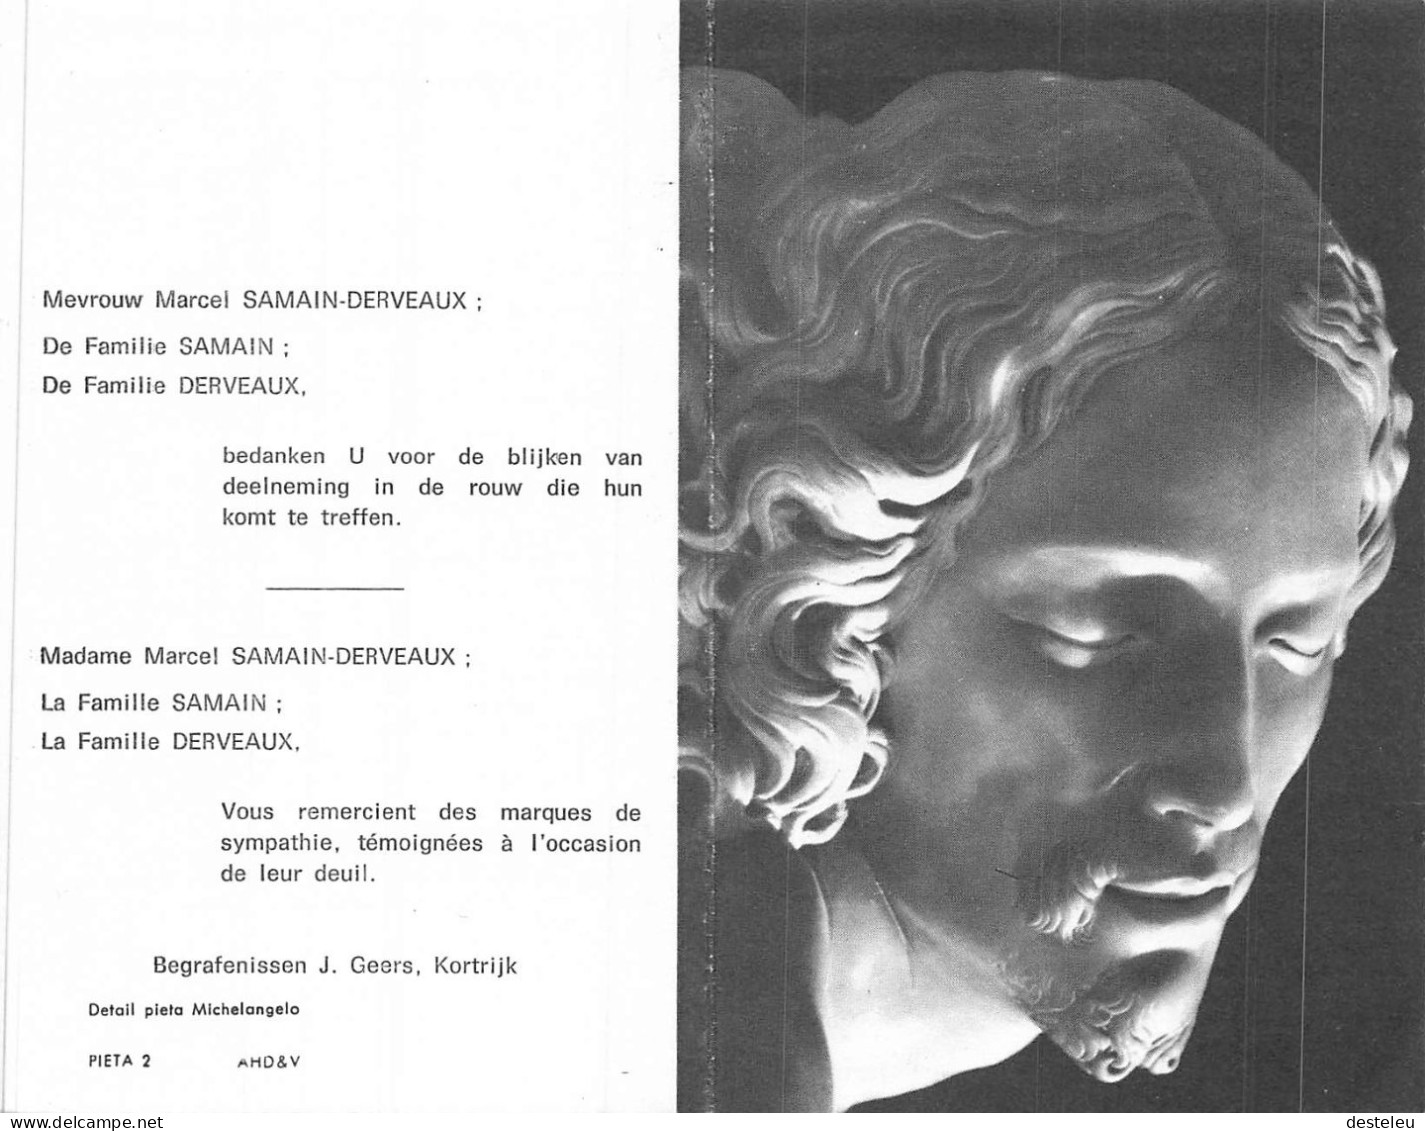 Doodsprentje / Image Mortuaire Marcel Samain - Derveaux - Mouscron Kortrijk 1893-1973 - Obituary Notices